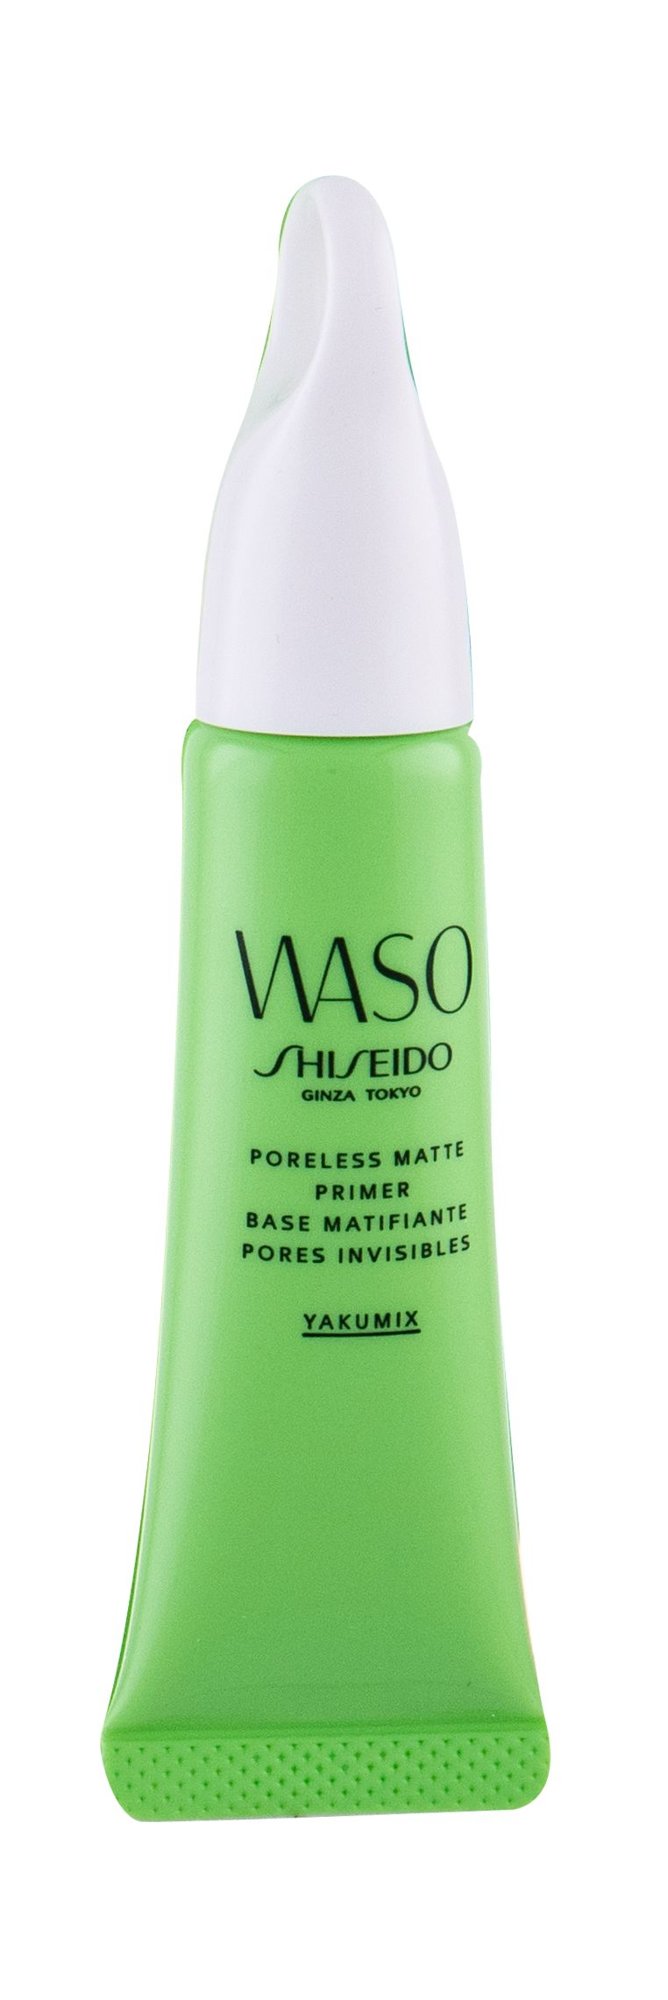 Shiseido Waso Poreless Matte Primer 20ml primeris